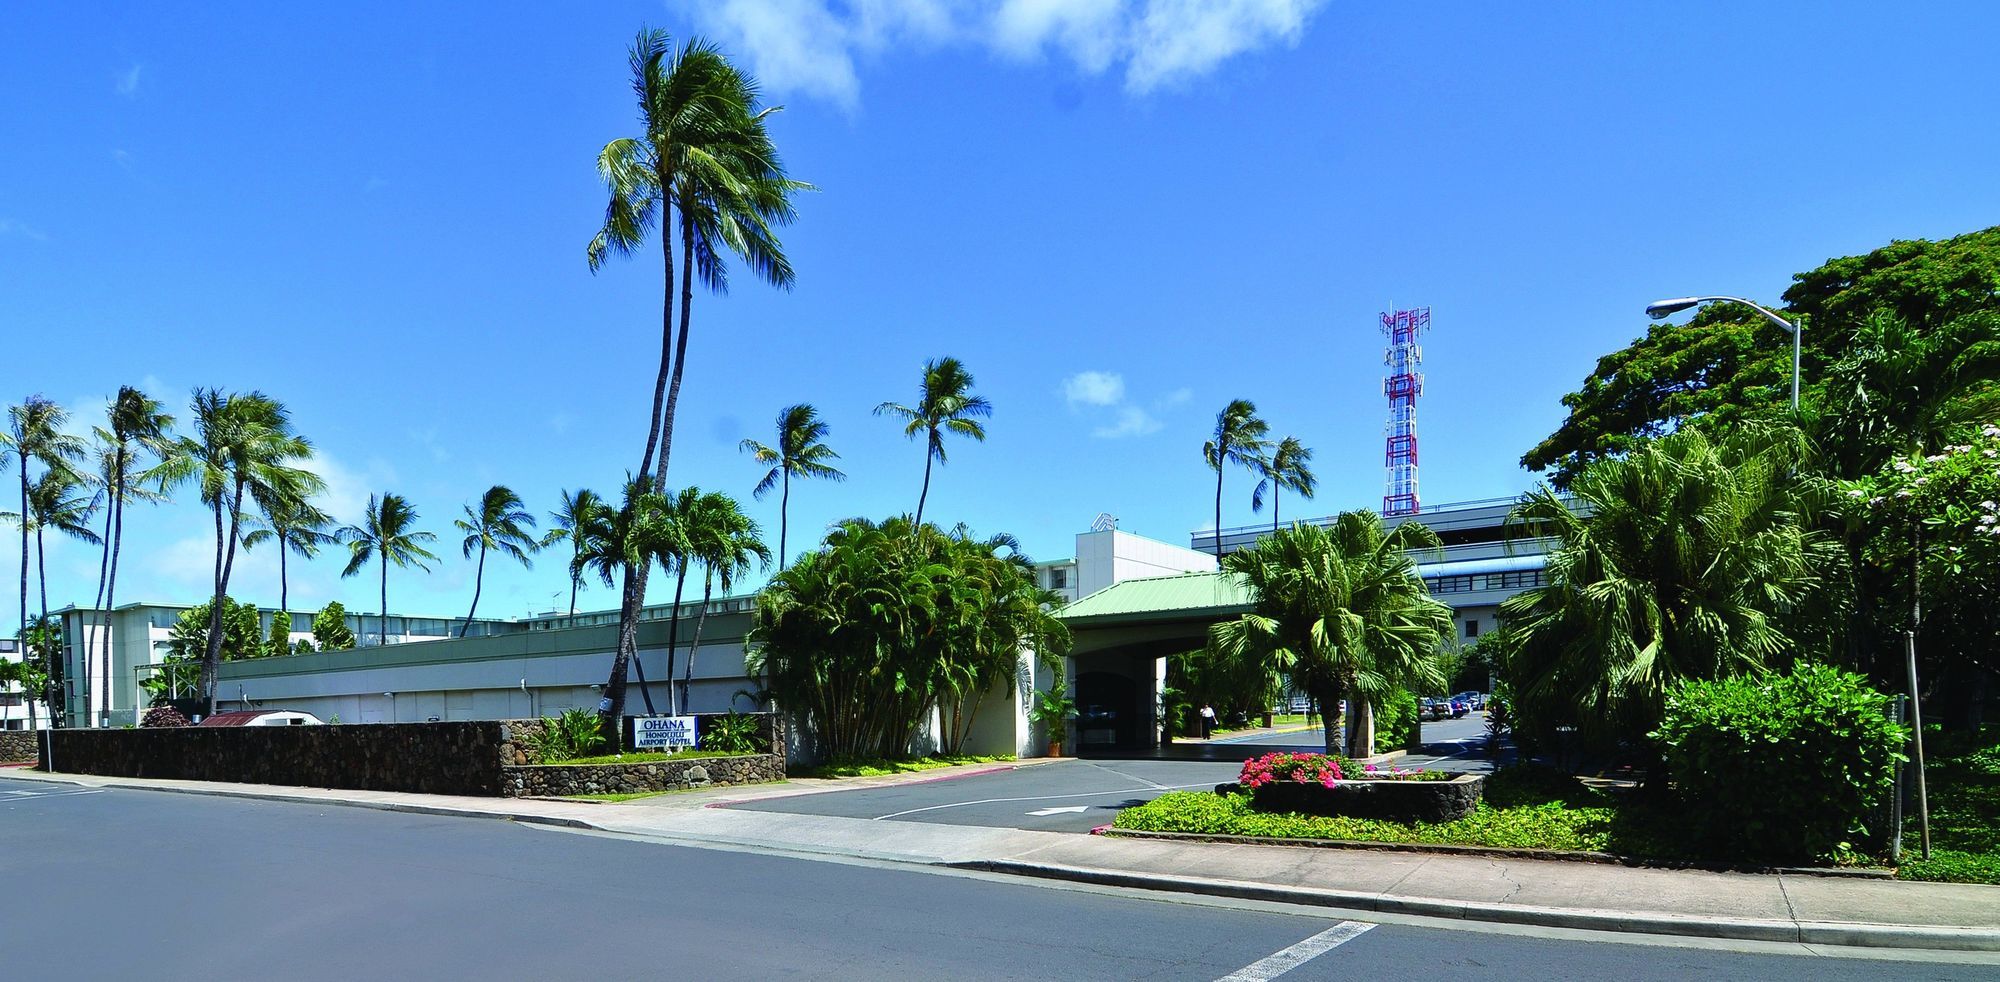 Airport Honolulu Hotel Exterior photo